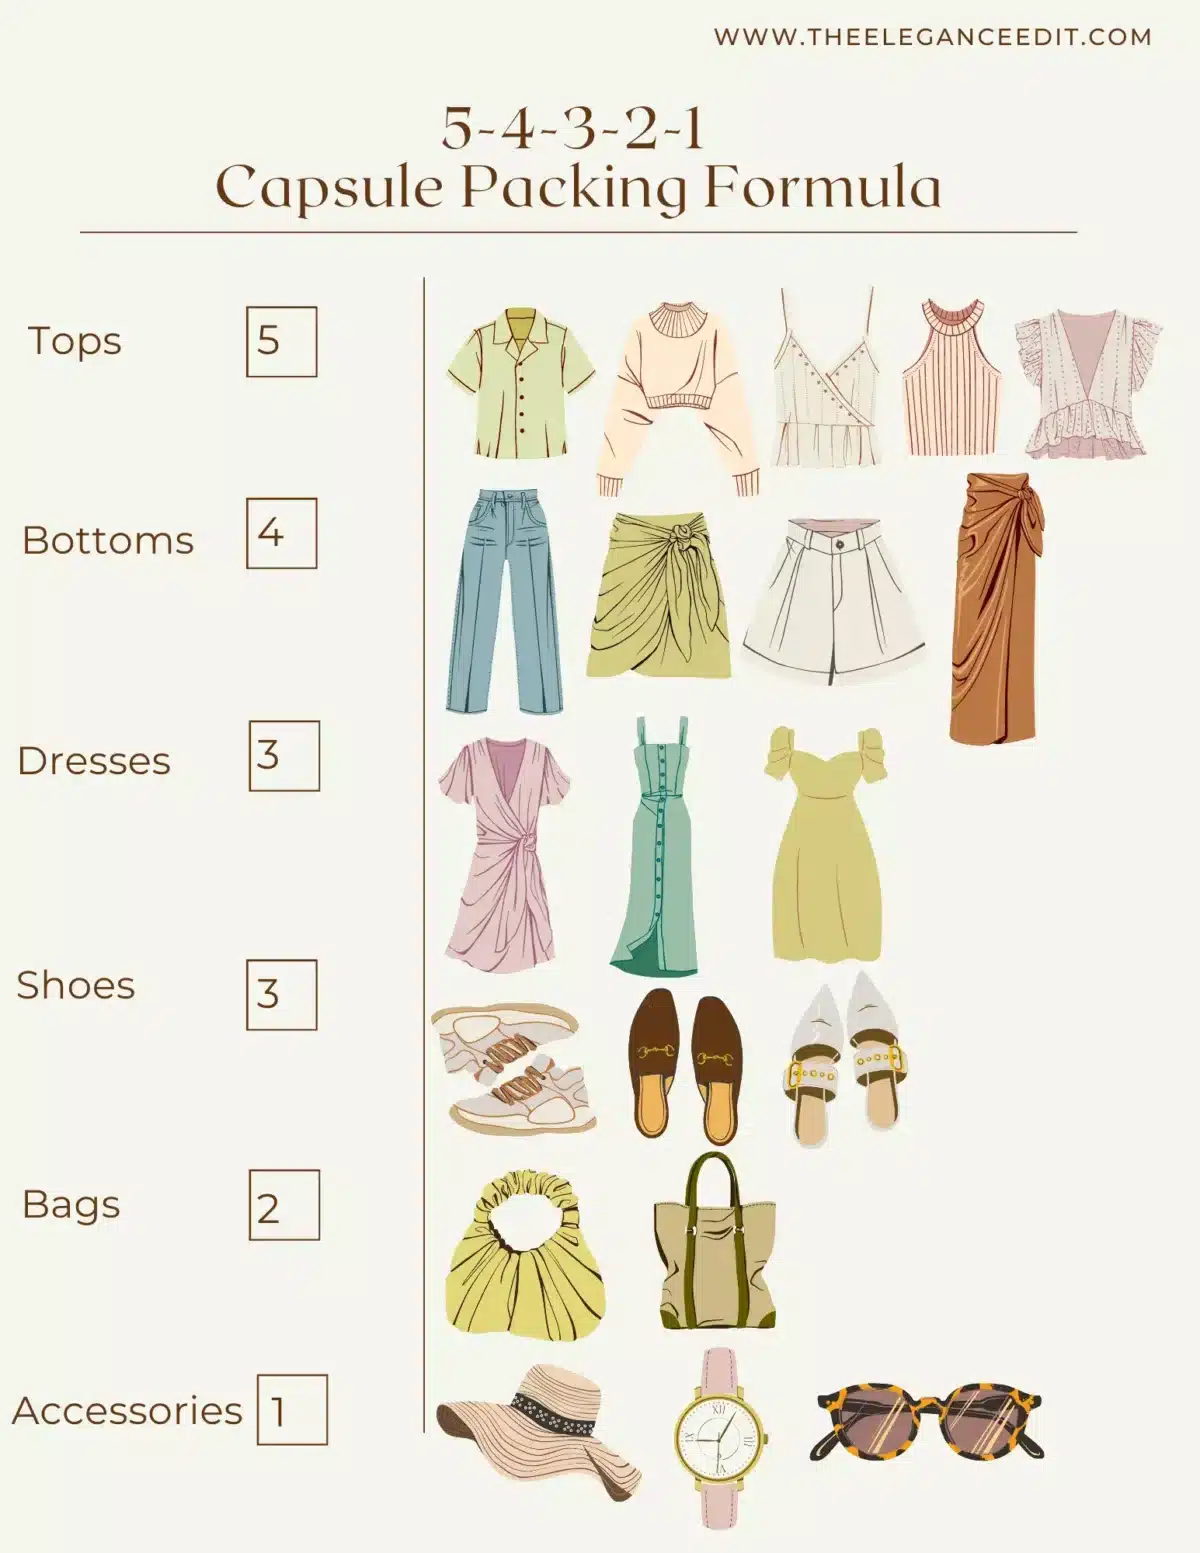 travel capsule wardrobe packing formula graphic 5-4-3-2-1 method